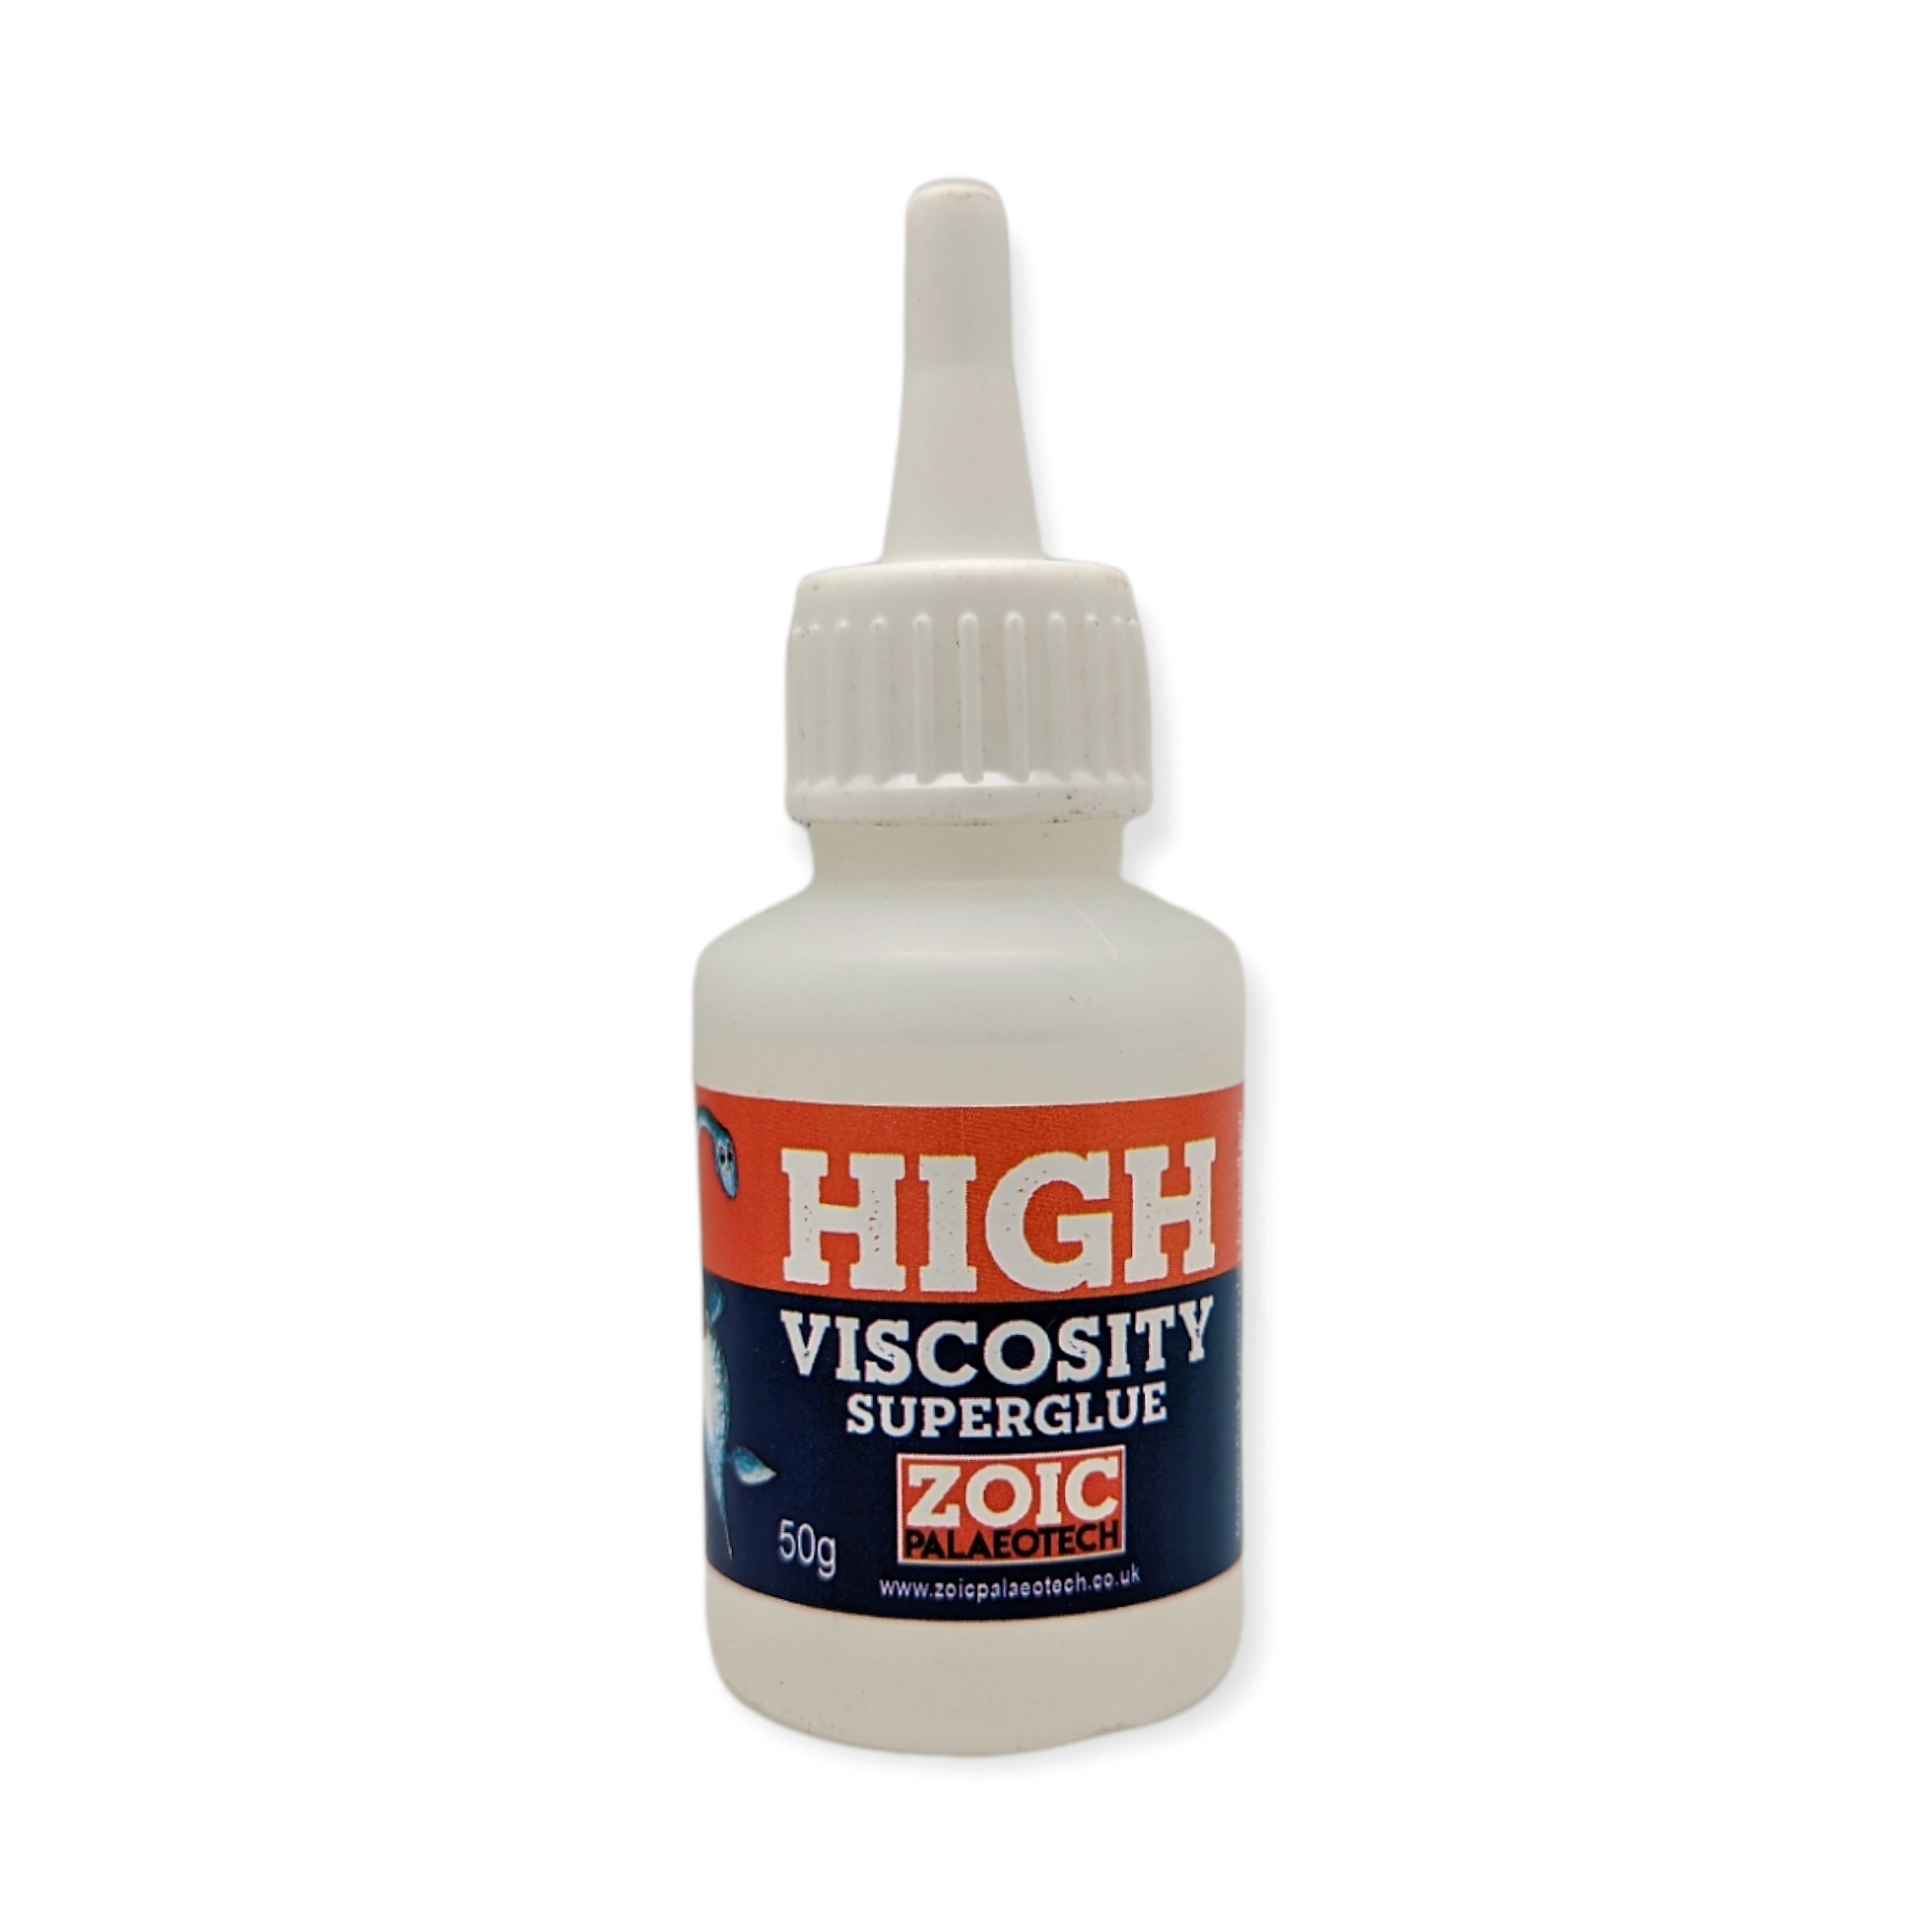 High Viscosity Superglue – ZOIC PalaeoTech Limited